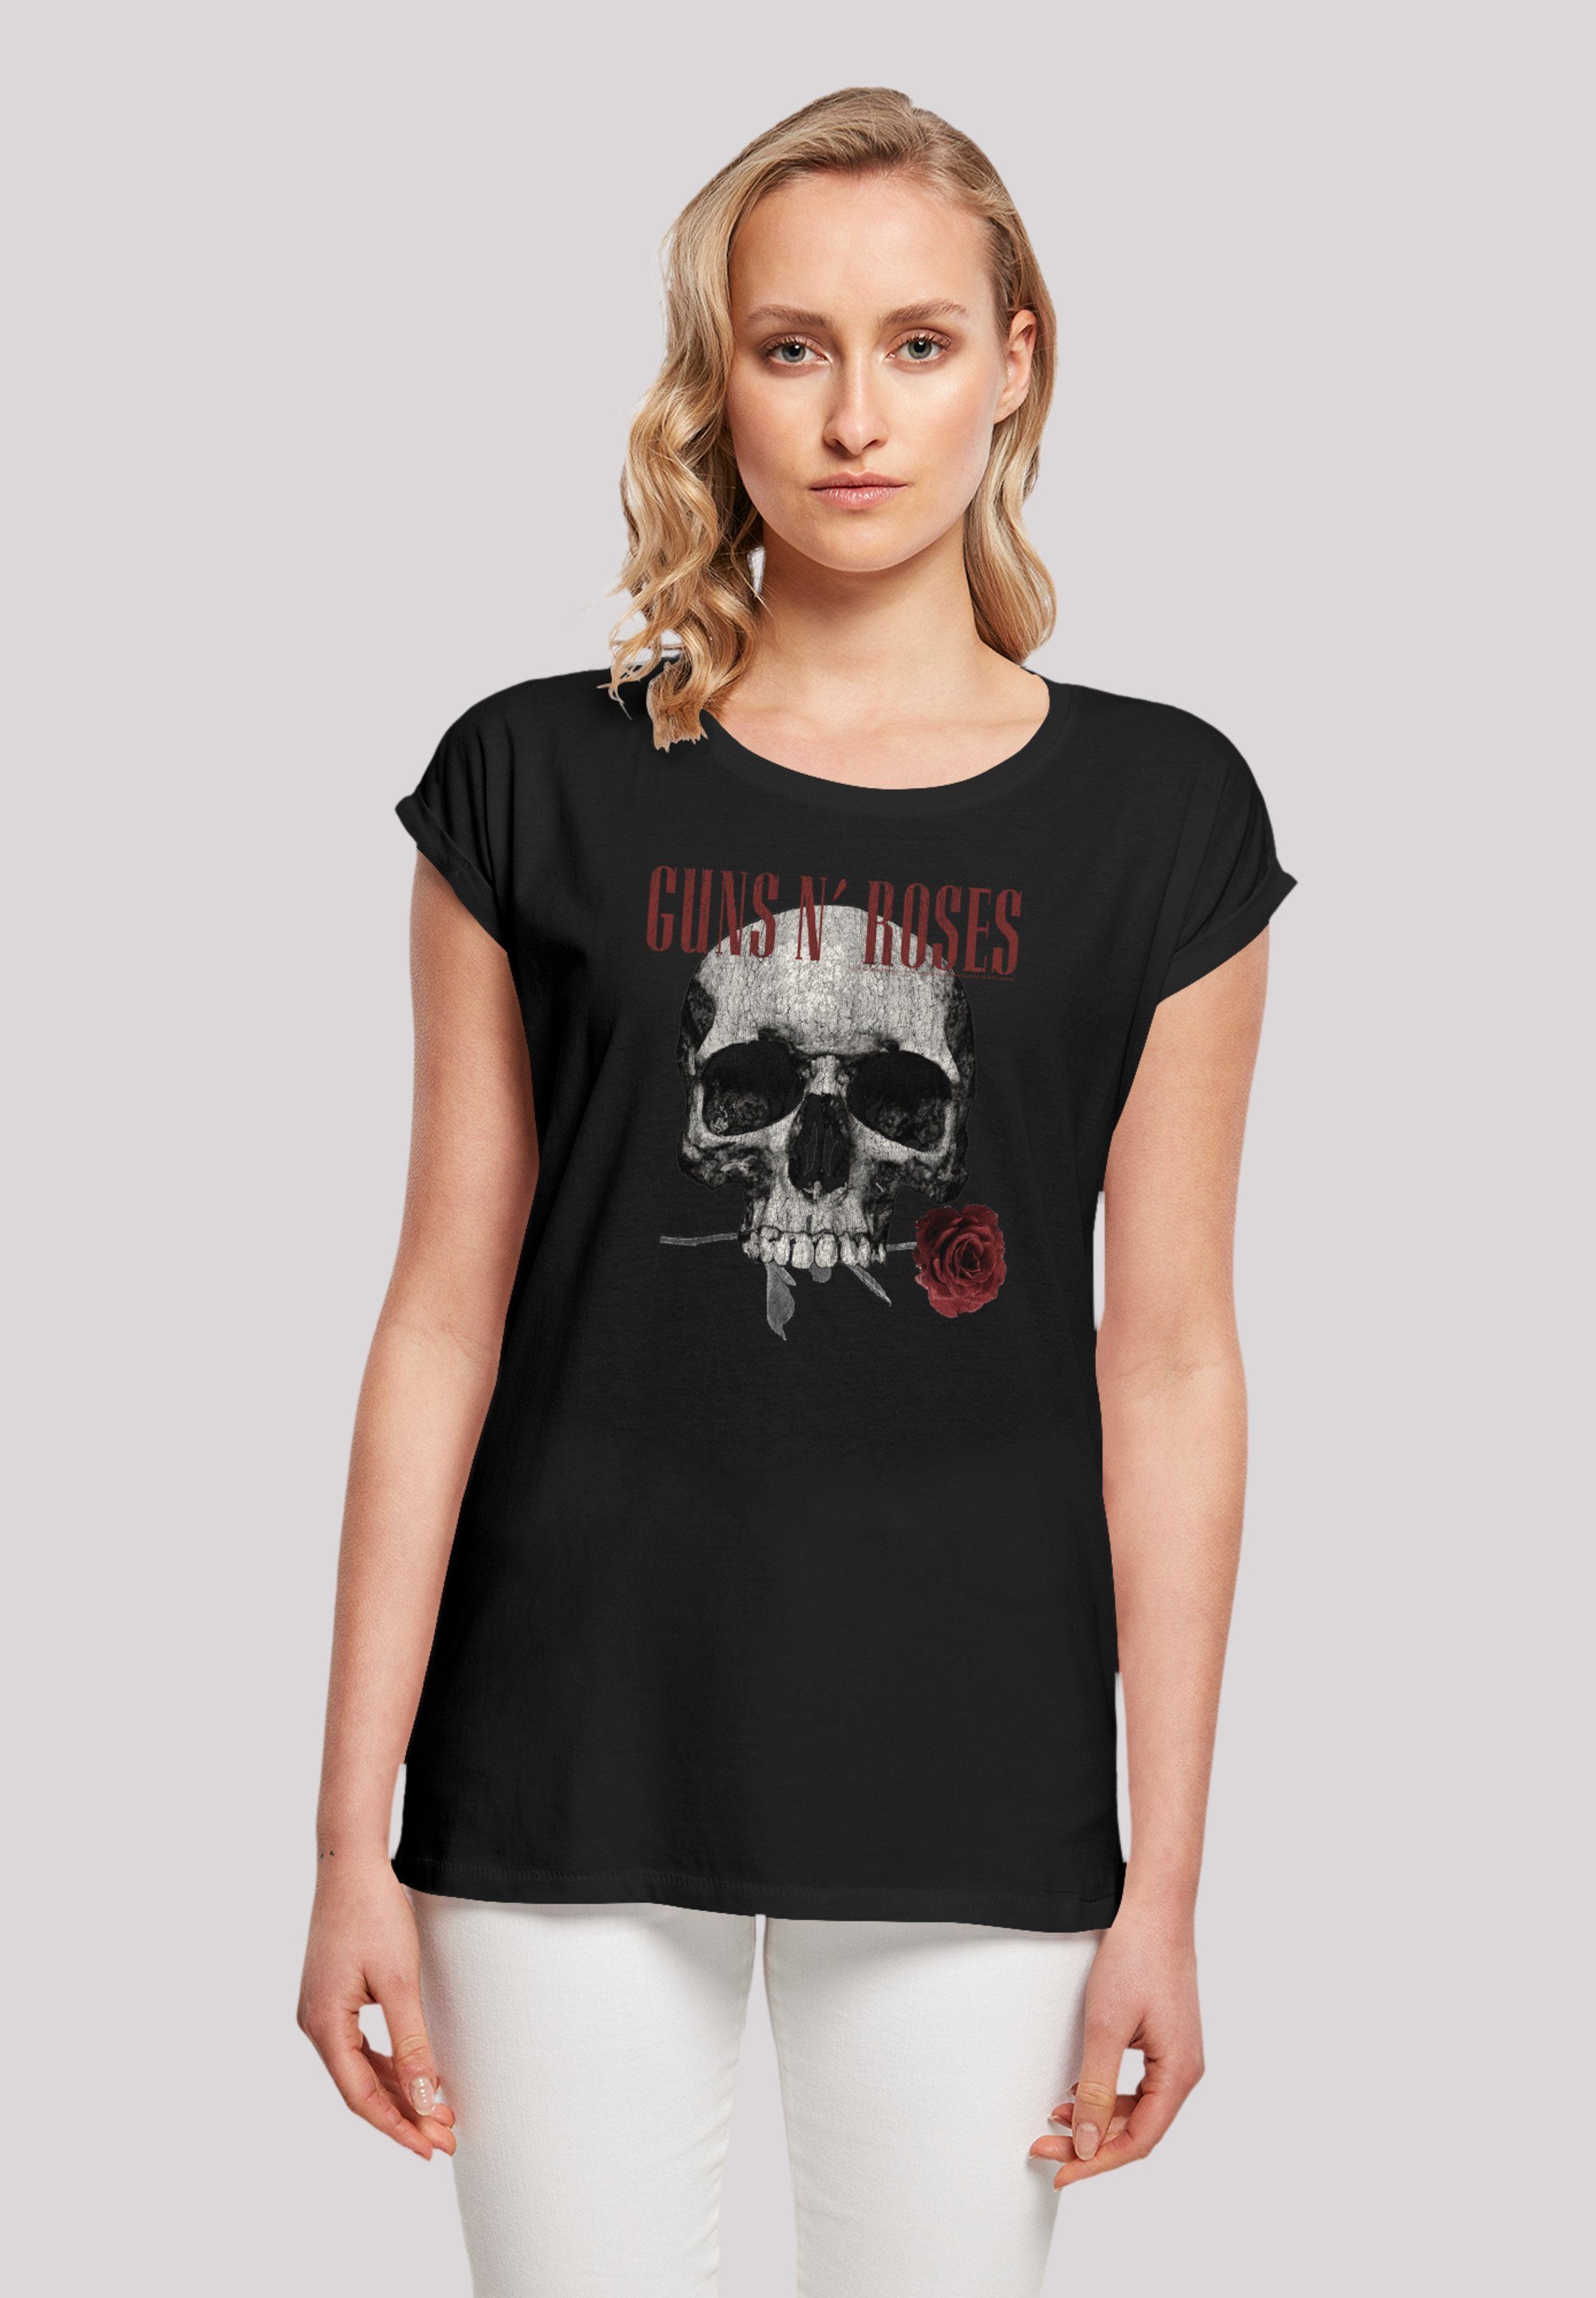 F4NT4STIC T-Shirt Guns 'n' Roses Flower Skull Rock Musik Band Premium Qualität schwarz